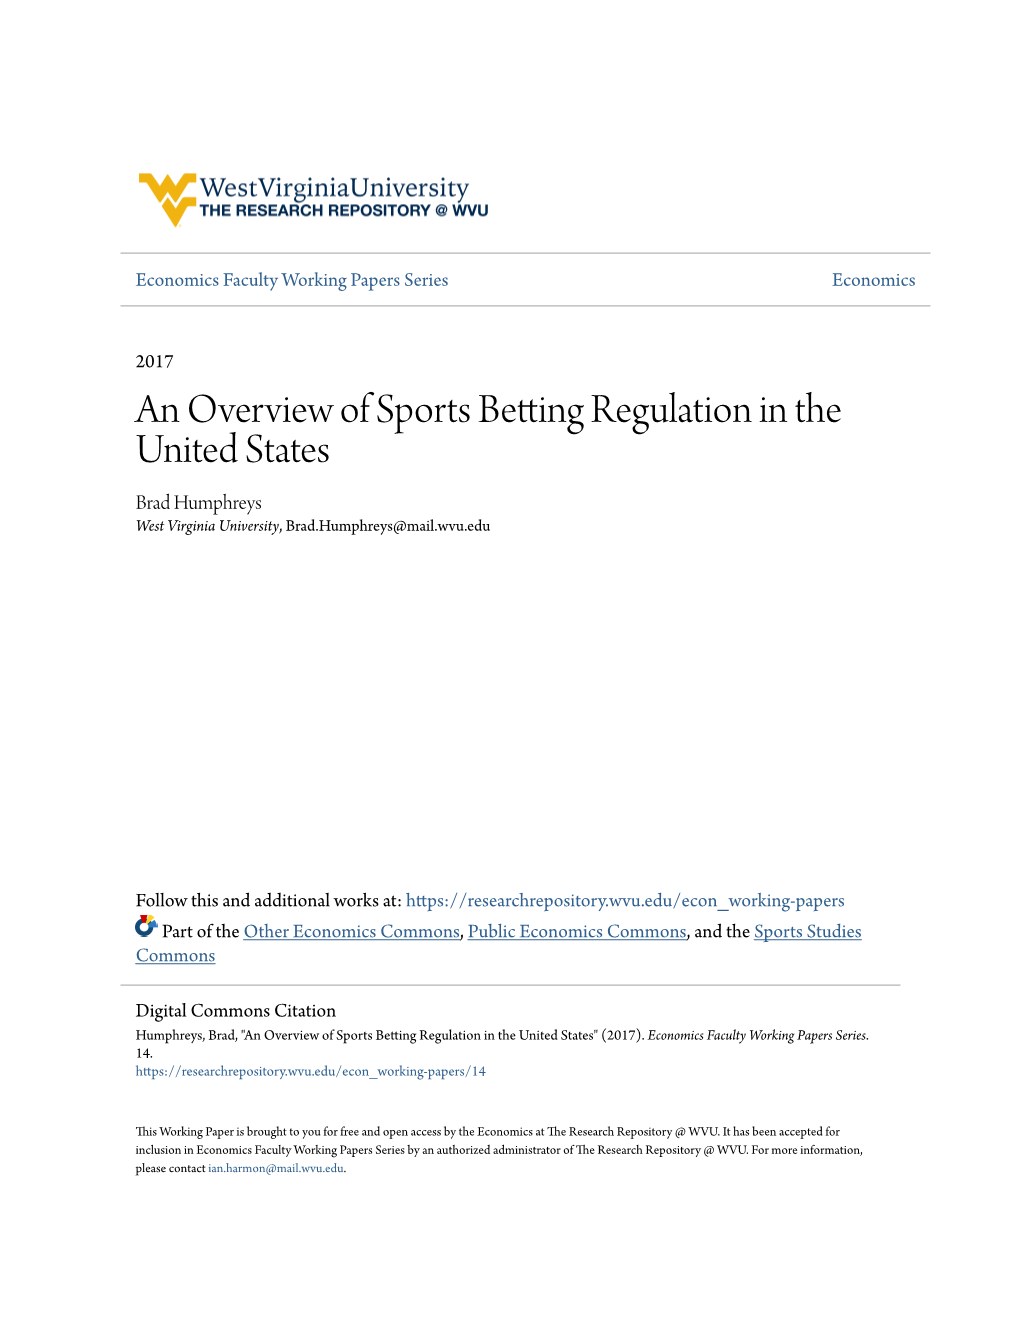 An Overview of Sports Betting Regulation in the United States Brad Humphreys West Virginia University, Brad.Humphreys@Mail.Wvu.Edu